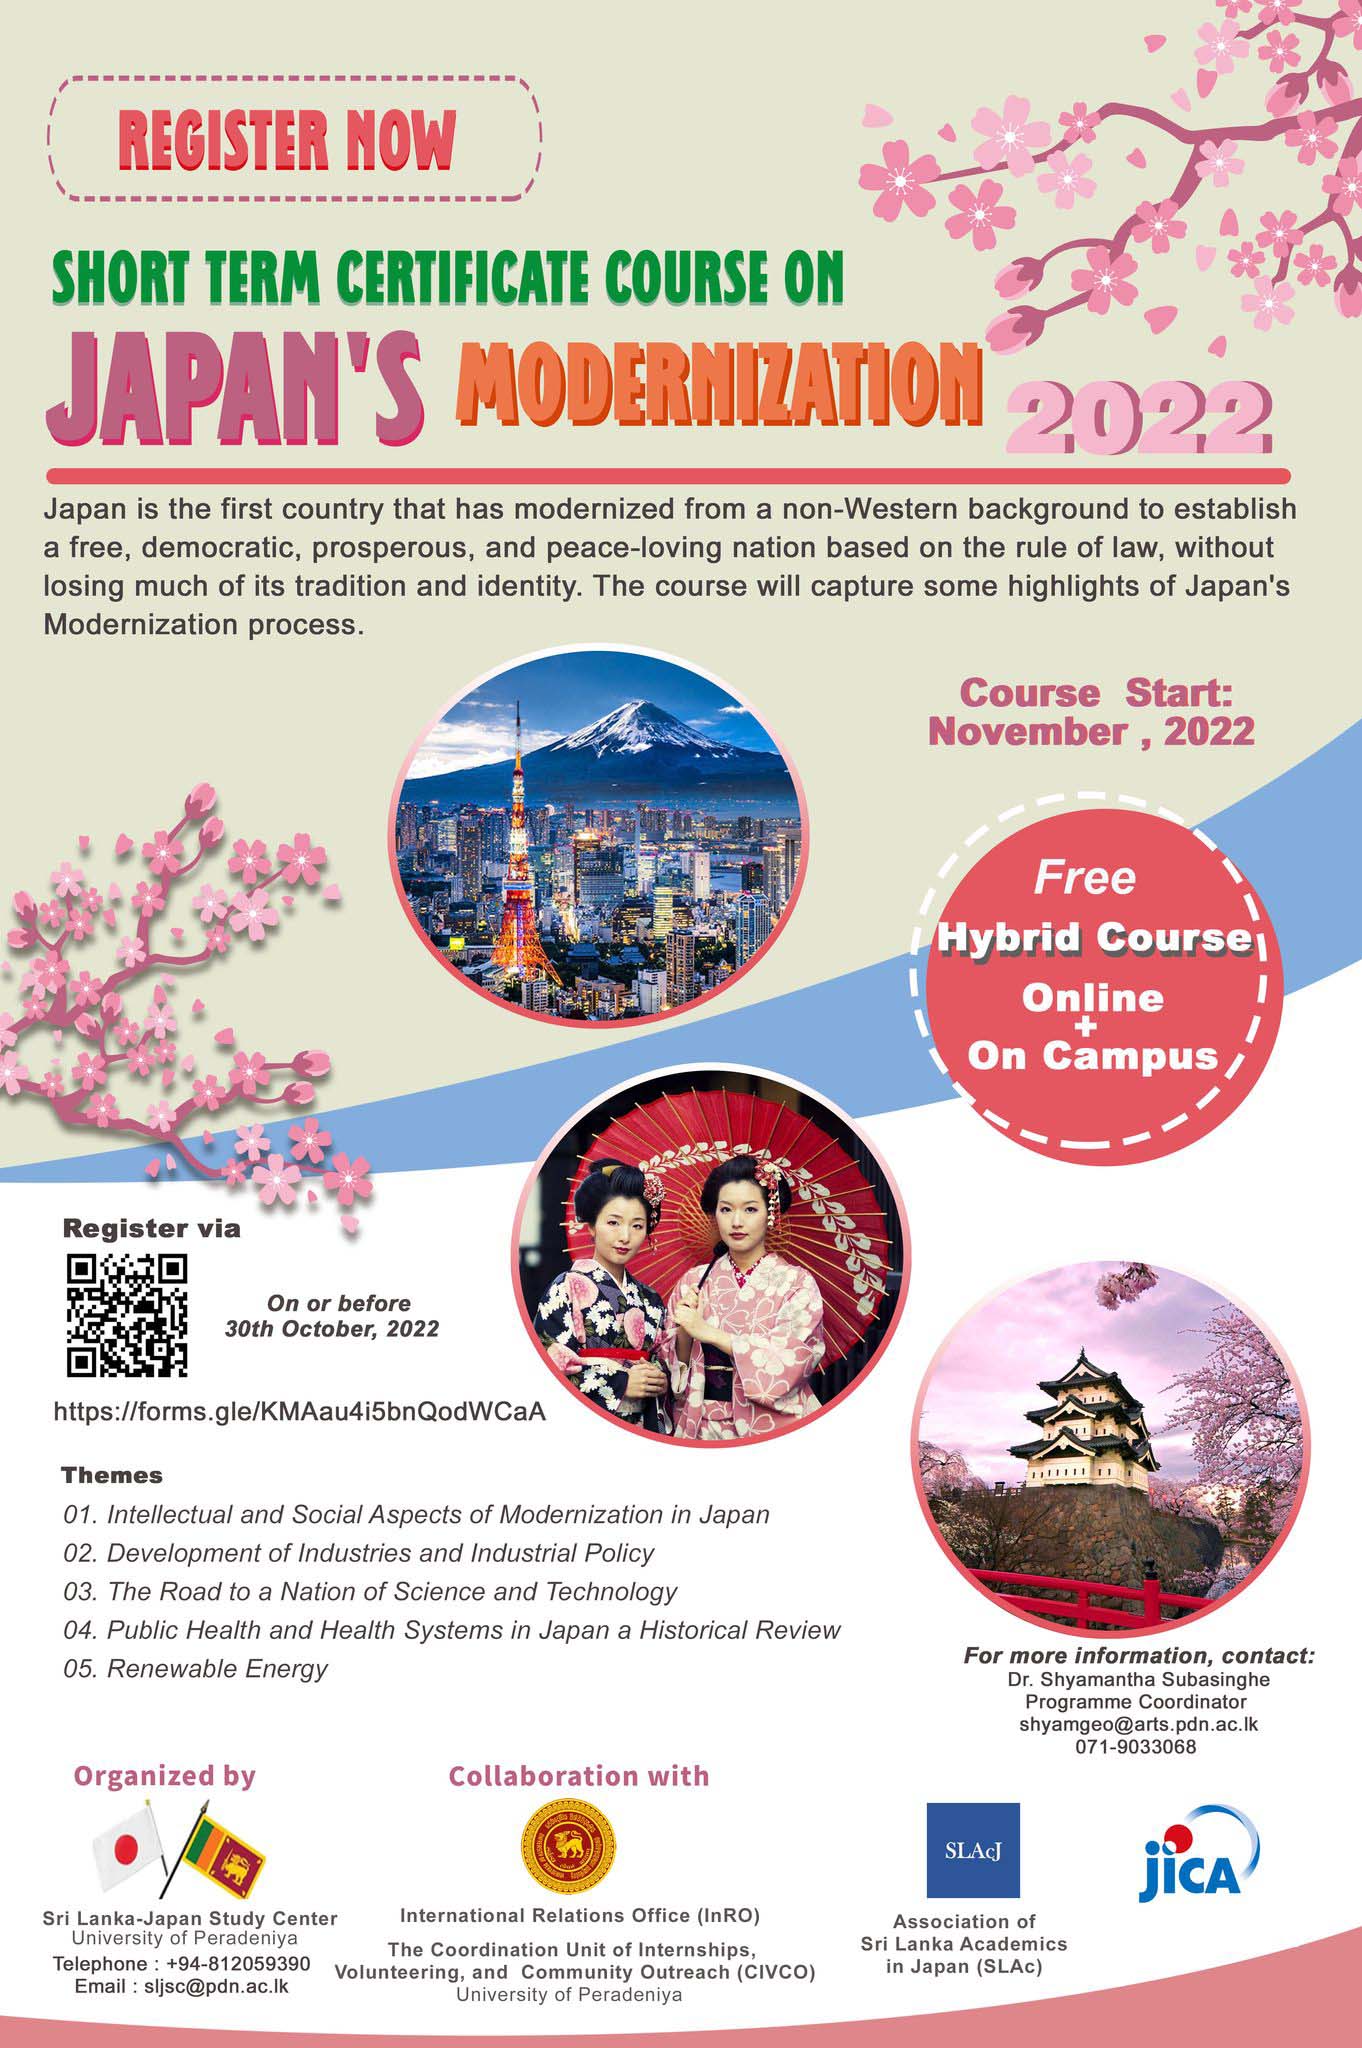 Short Term Certificate Course on Japan's Modernization (2022/2023) - University of Peradeniya